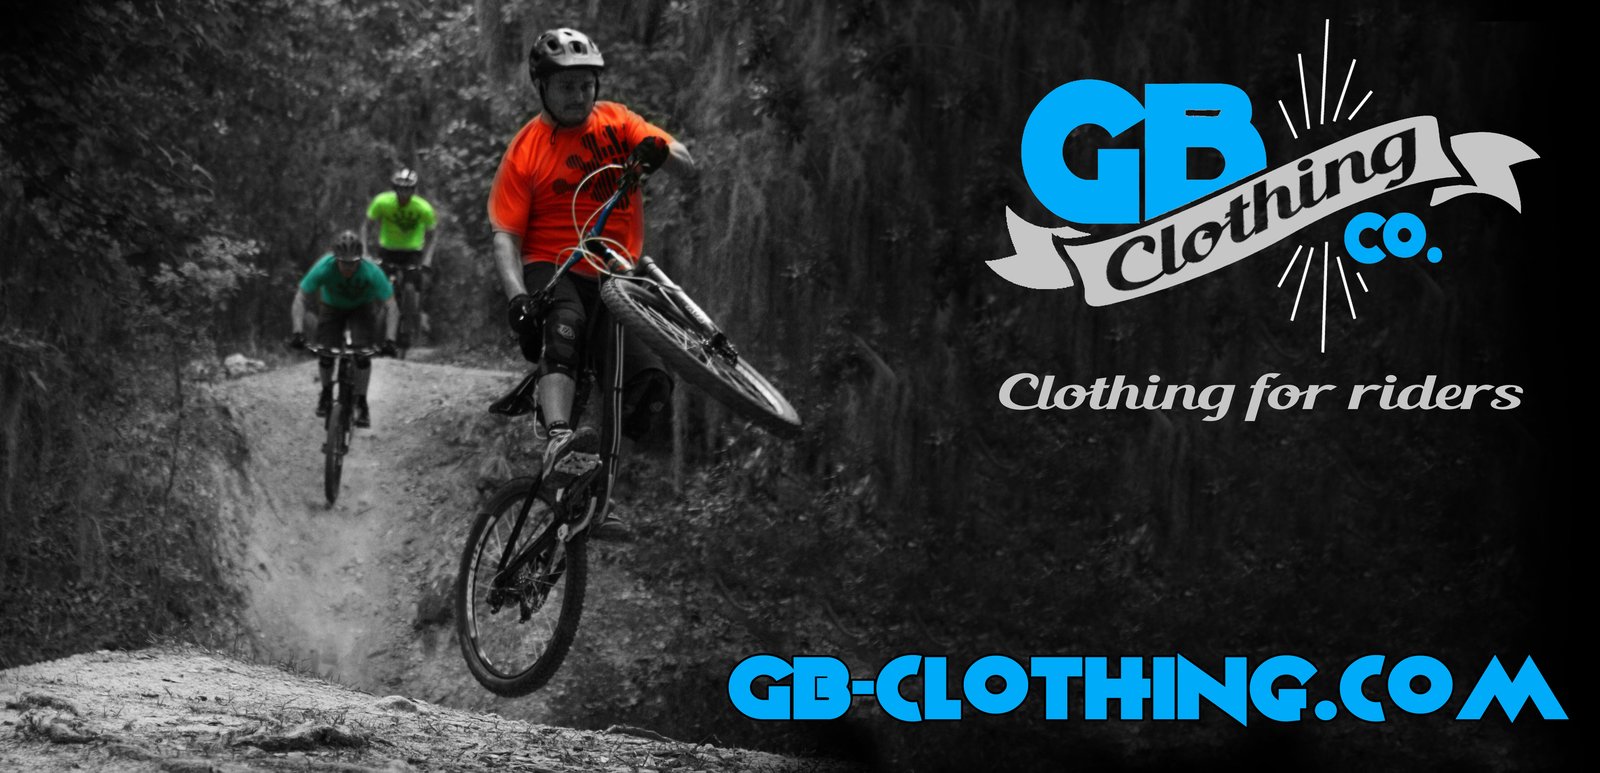 GB-Clothing Co.